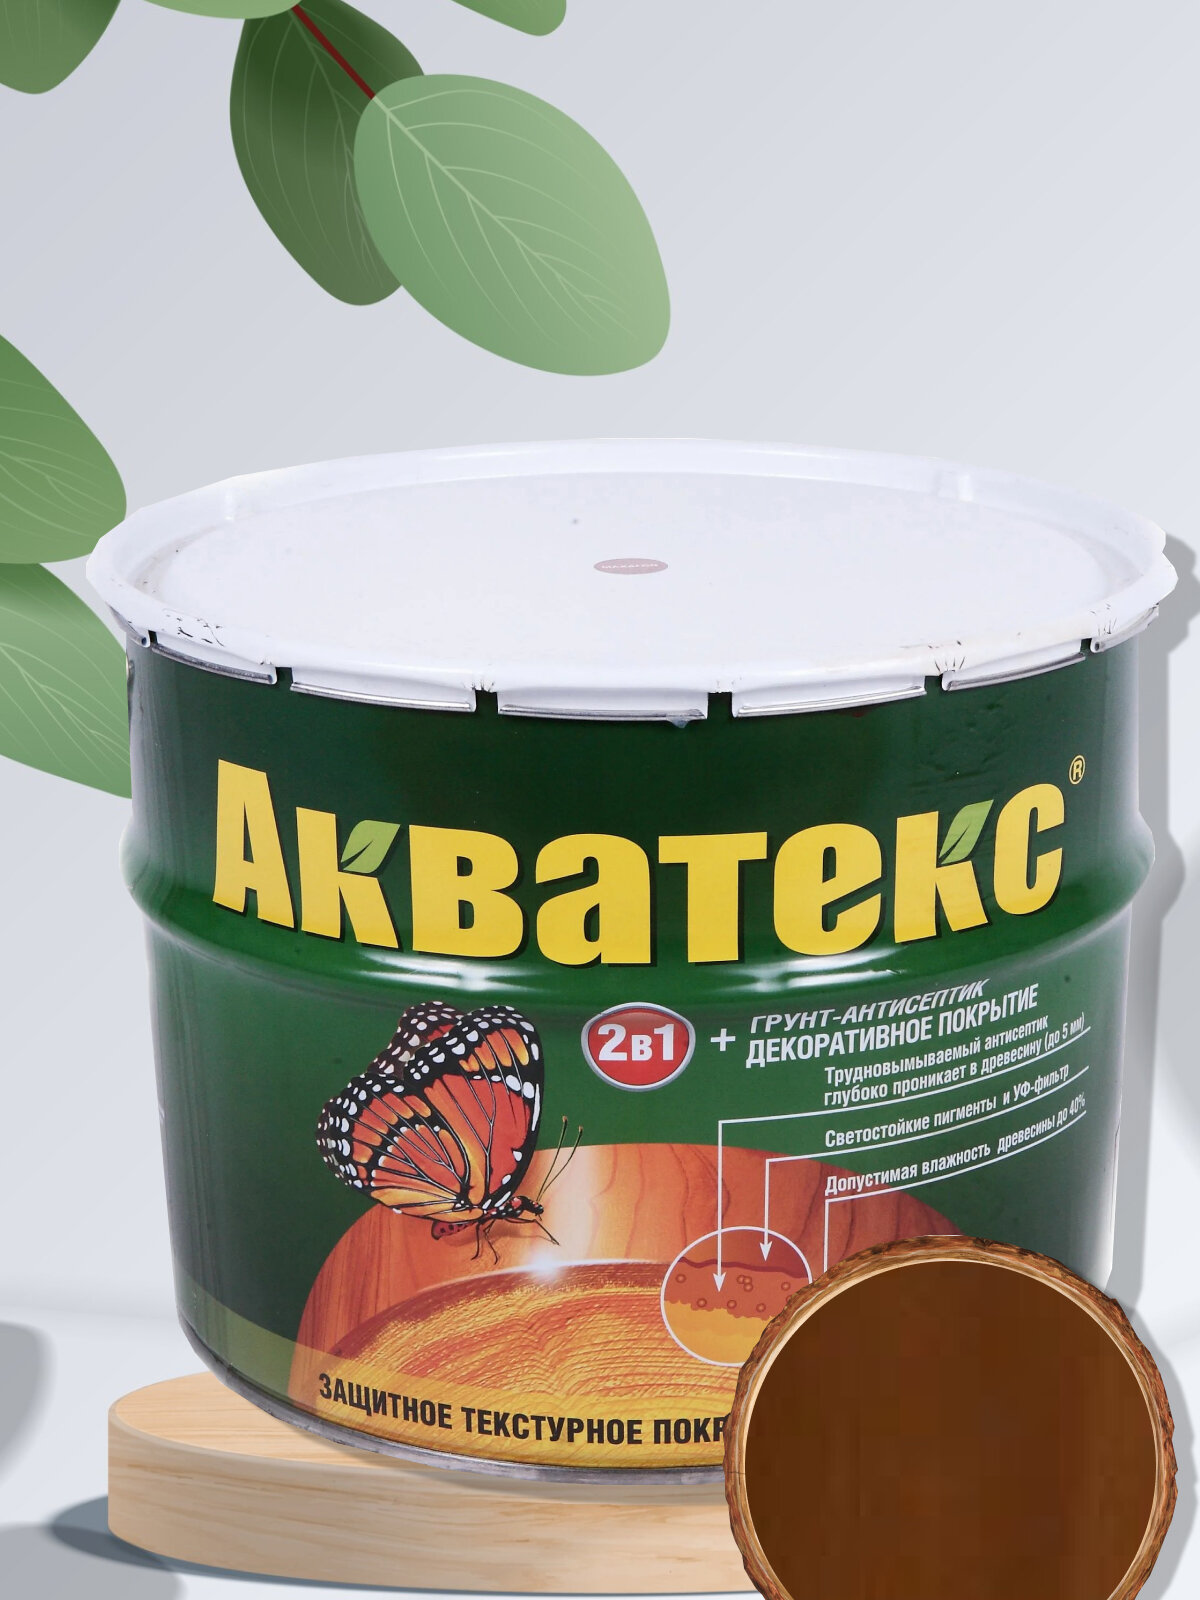 Акватекс" - декоративная пропитка и грунтовка объемом 9 литров, цвет "Орех